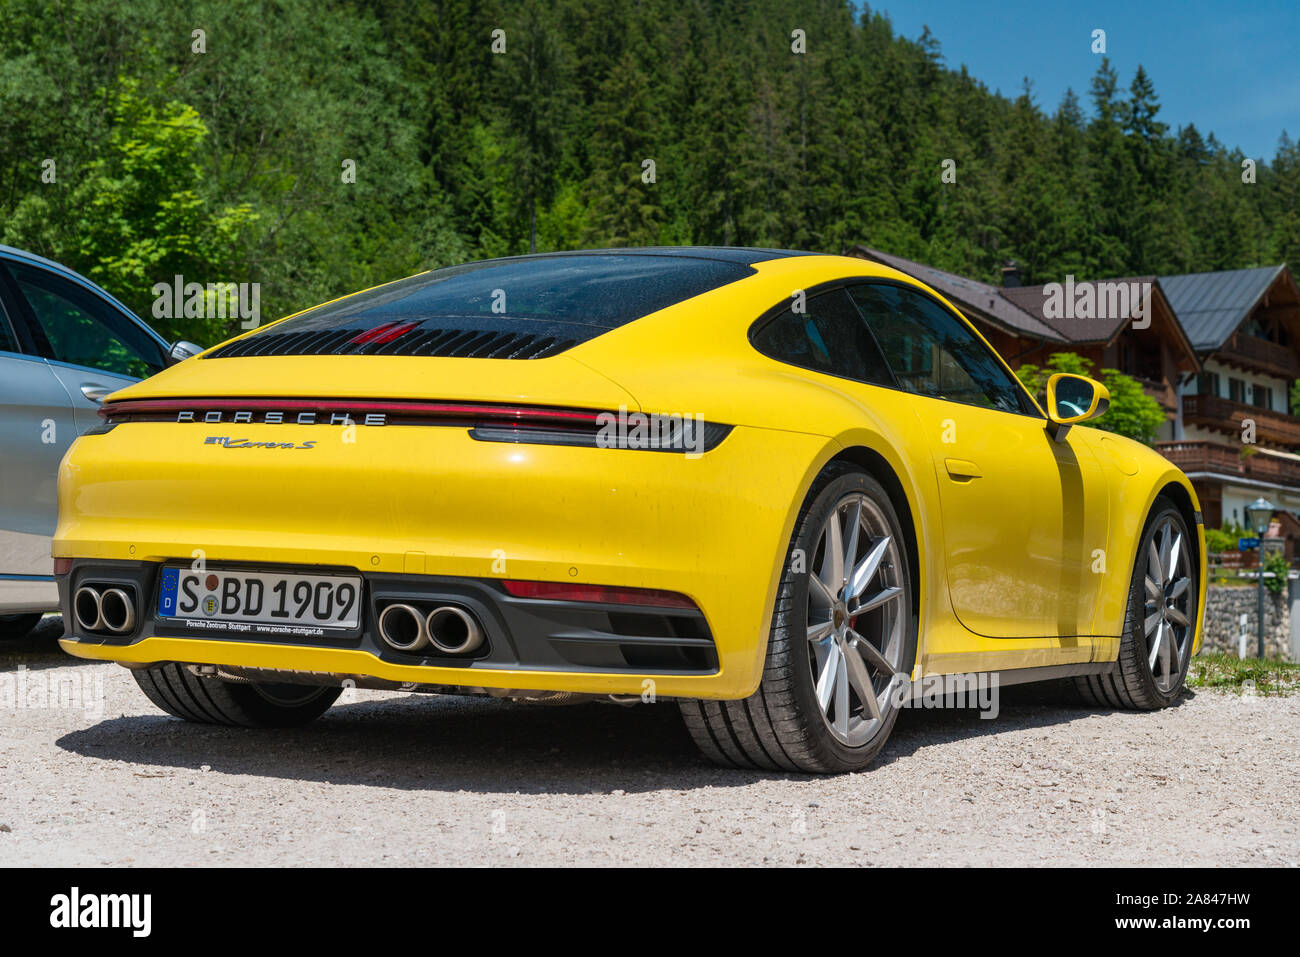 Antenbichl, Germany - June 11, 2019: Yellow sportcar Porsche Carrera 911 in front of hotel Stock Photo